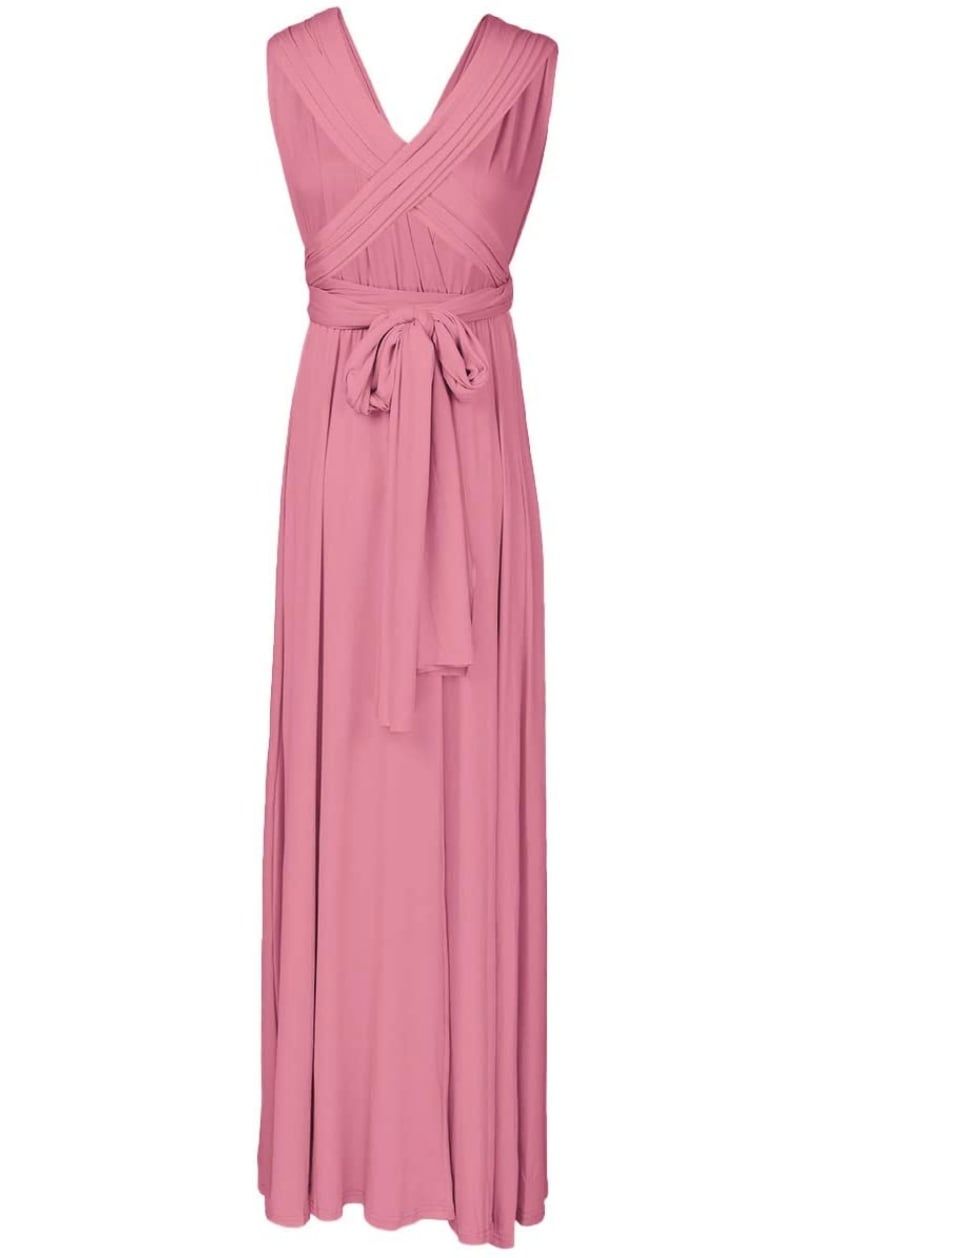 Style B073CGBPLG IWEMEK Size 0 Bridesmaid Pink Floor Length Maxi on Queenly